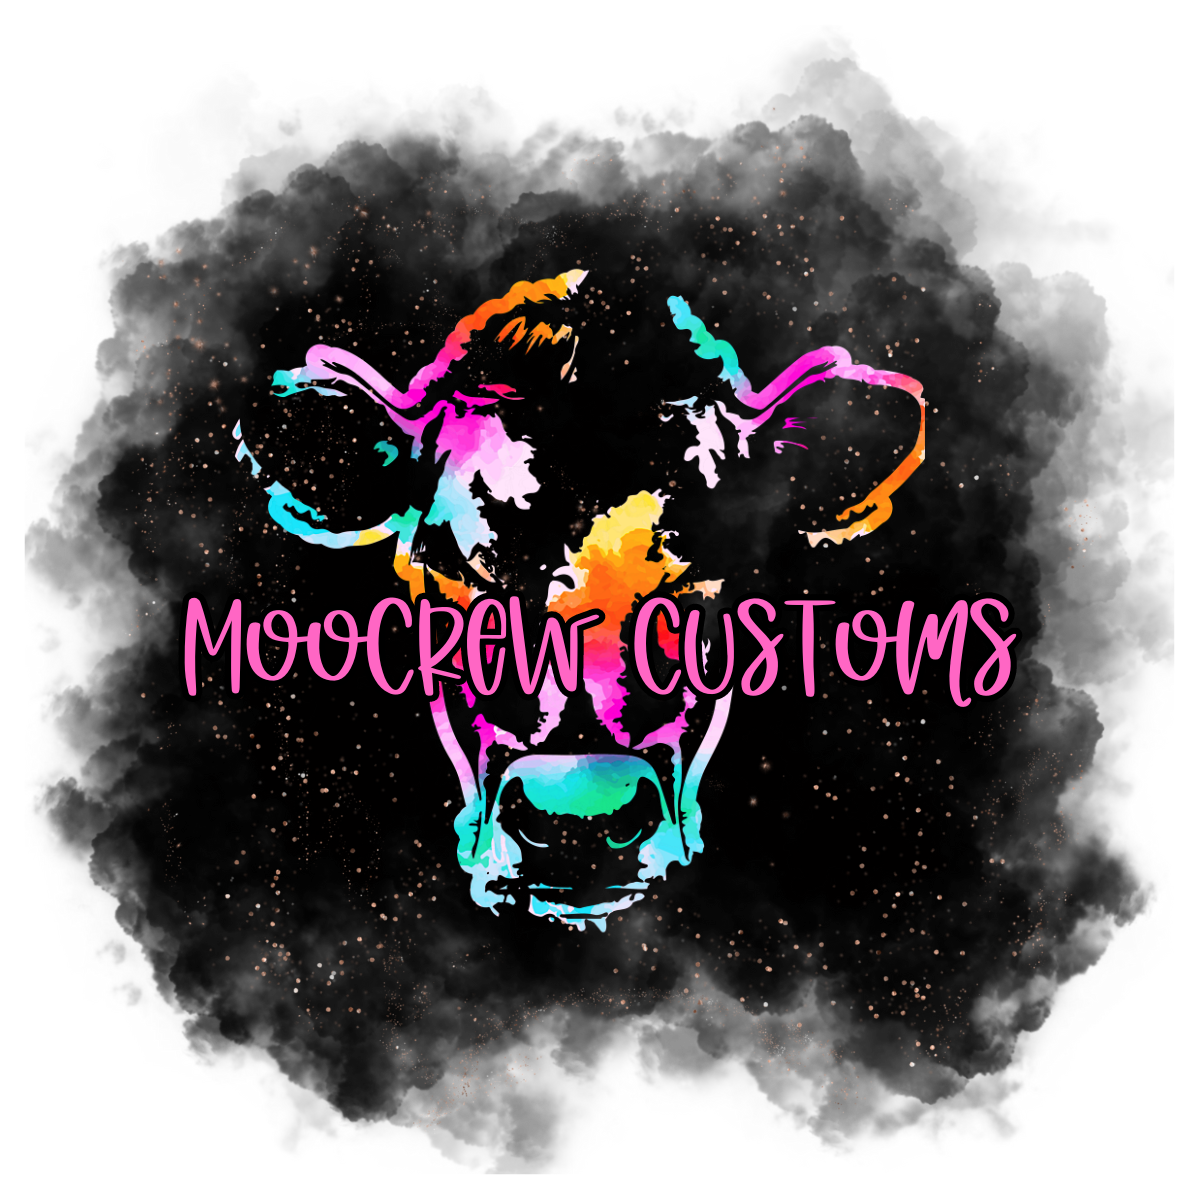 MooCrew Customs